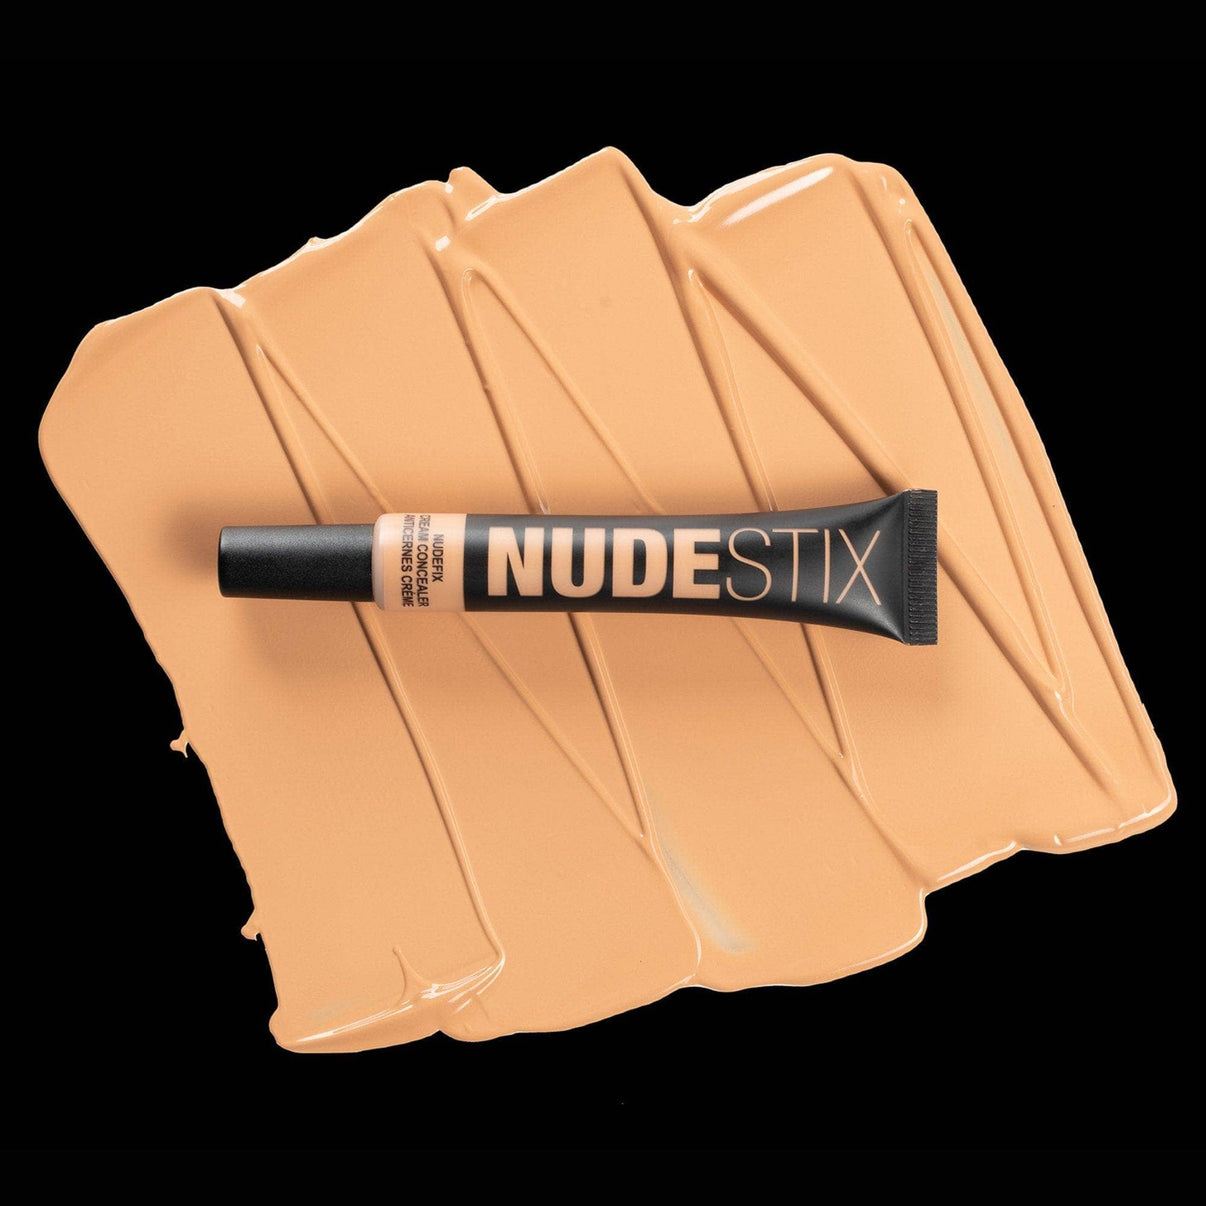 Nudefix cream concealer in shade nude 5 on top of texture swatch